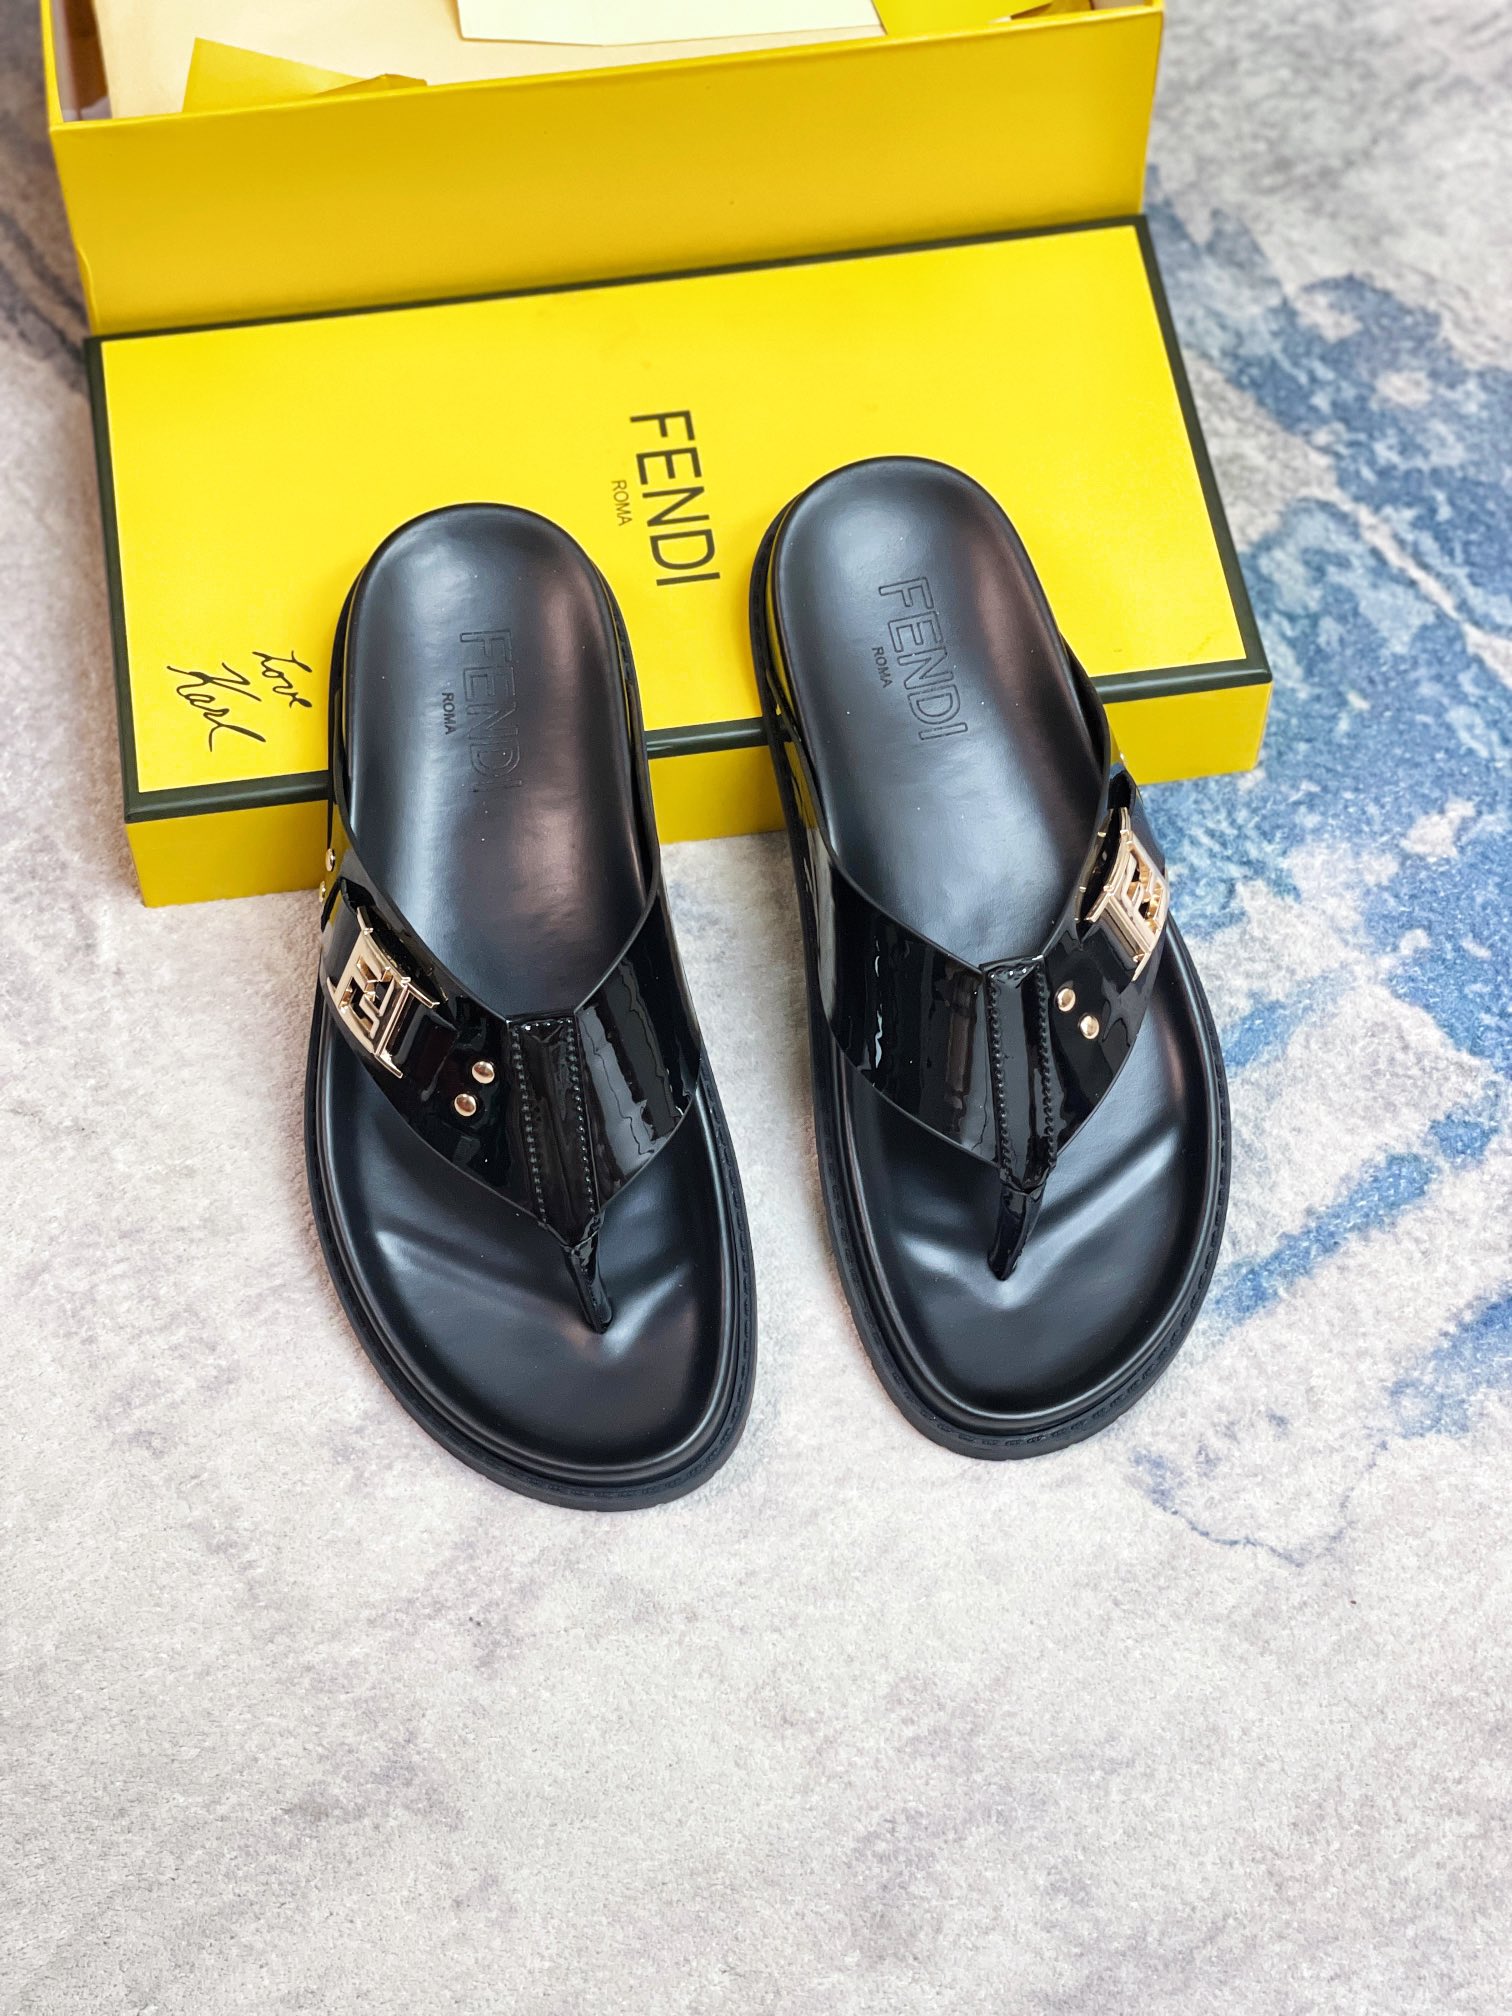 Fendi Shoes Slippers Men Calfskin Cowhide Summer Collection